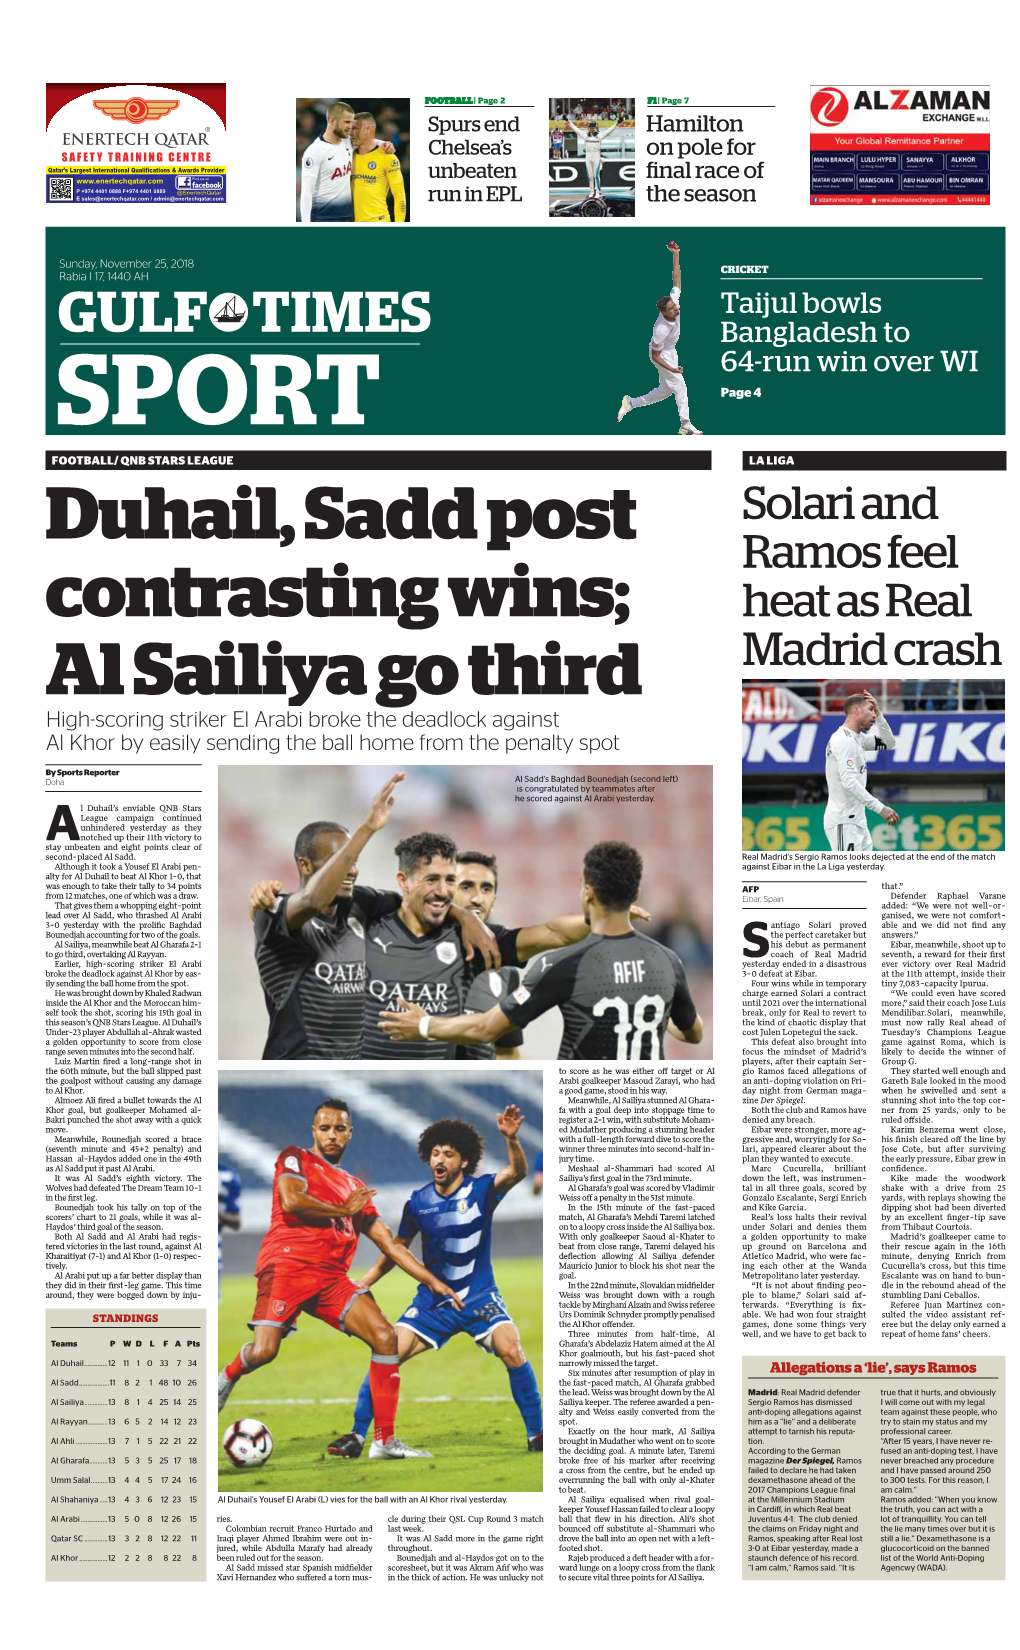 Al Sailiya Go Third Madrid Crash High-Scoring Striker El Arabi Broke the Deadlock Against Al Khor by Easily Sending the Ball Home from the Penalty Spot